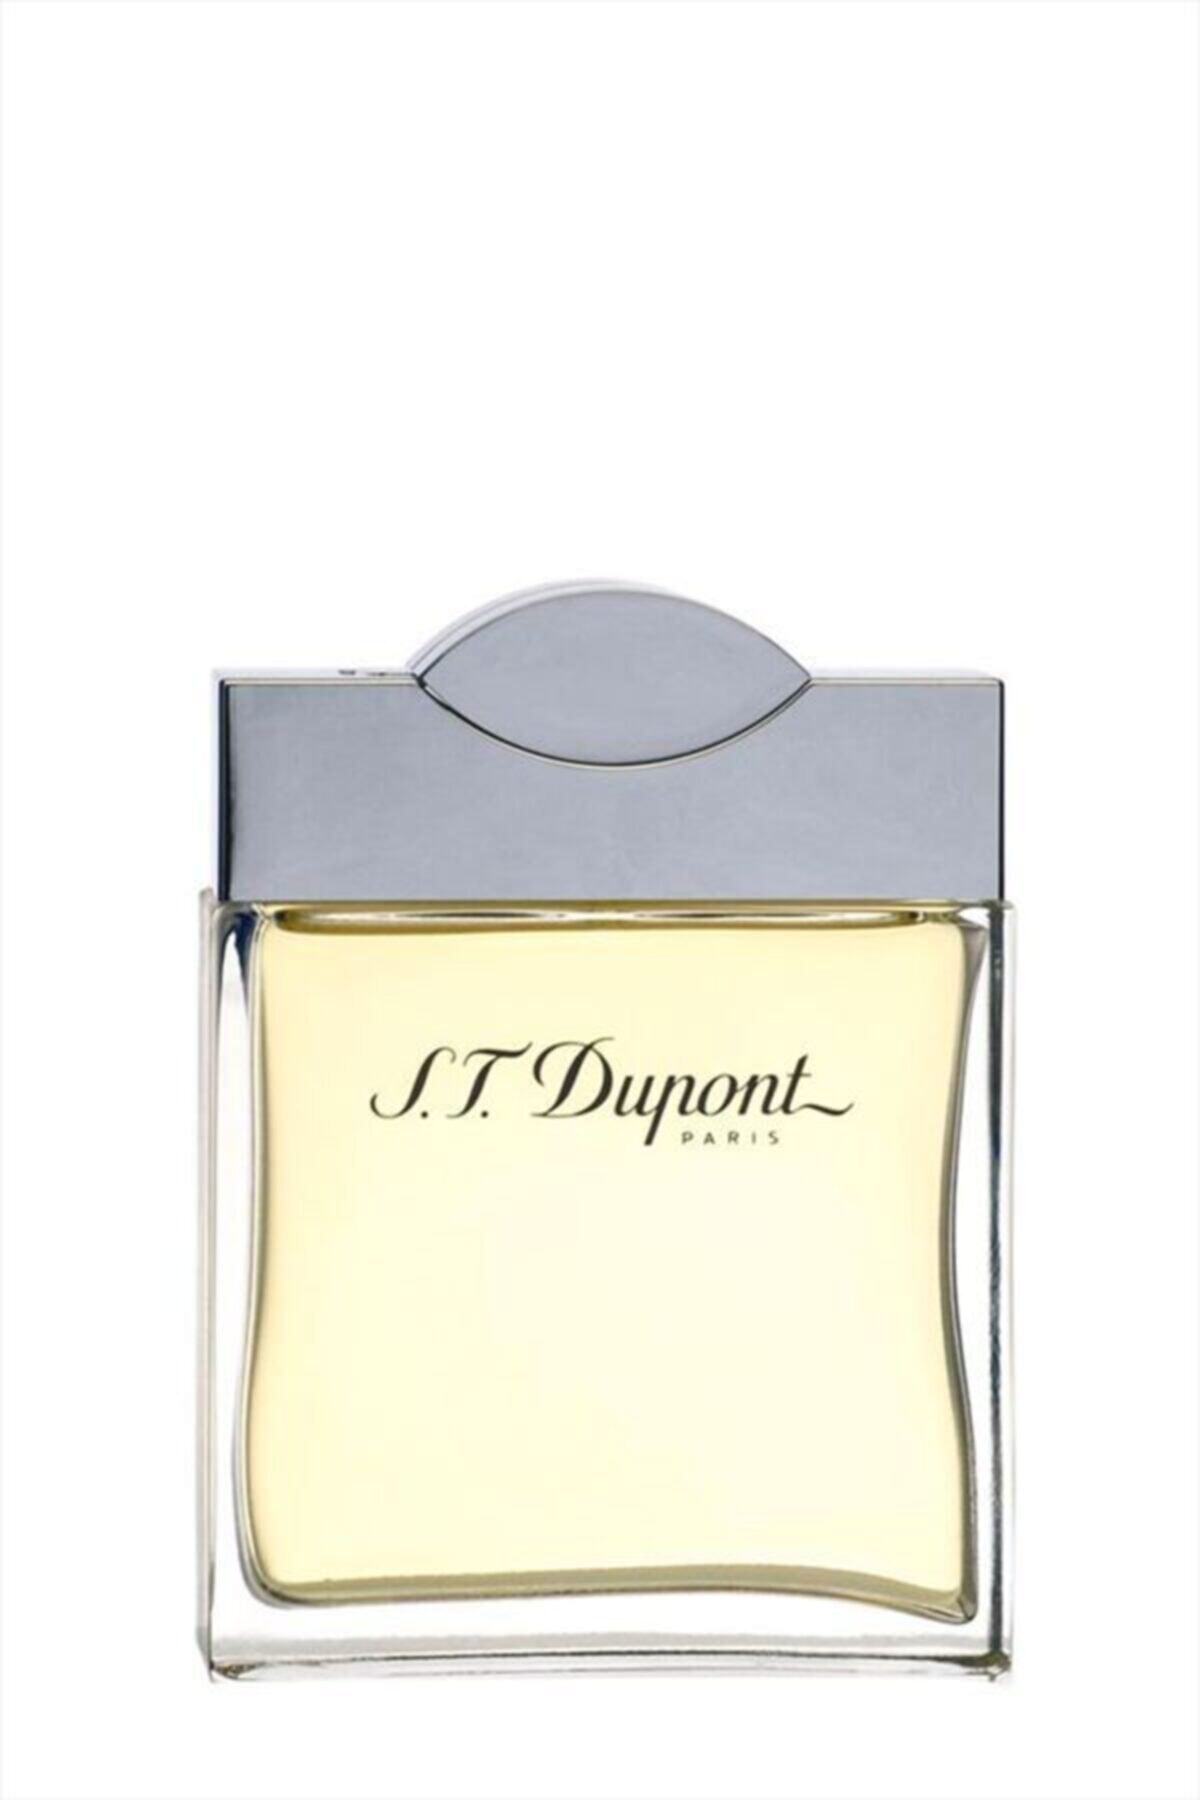 Dupont pour homme. S.T. Dupont Dupont (m) EDT 100 ml.. S.T.Dupont Парфюм мужской. S T Dupont туалетная вода. S.T. Dupont pour homme s.t. Dupont.